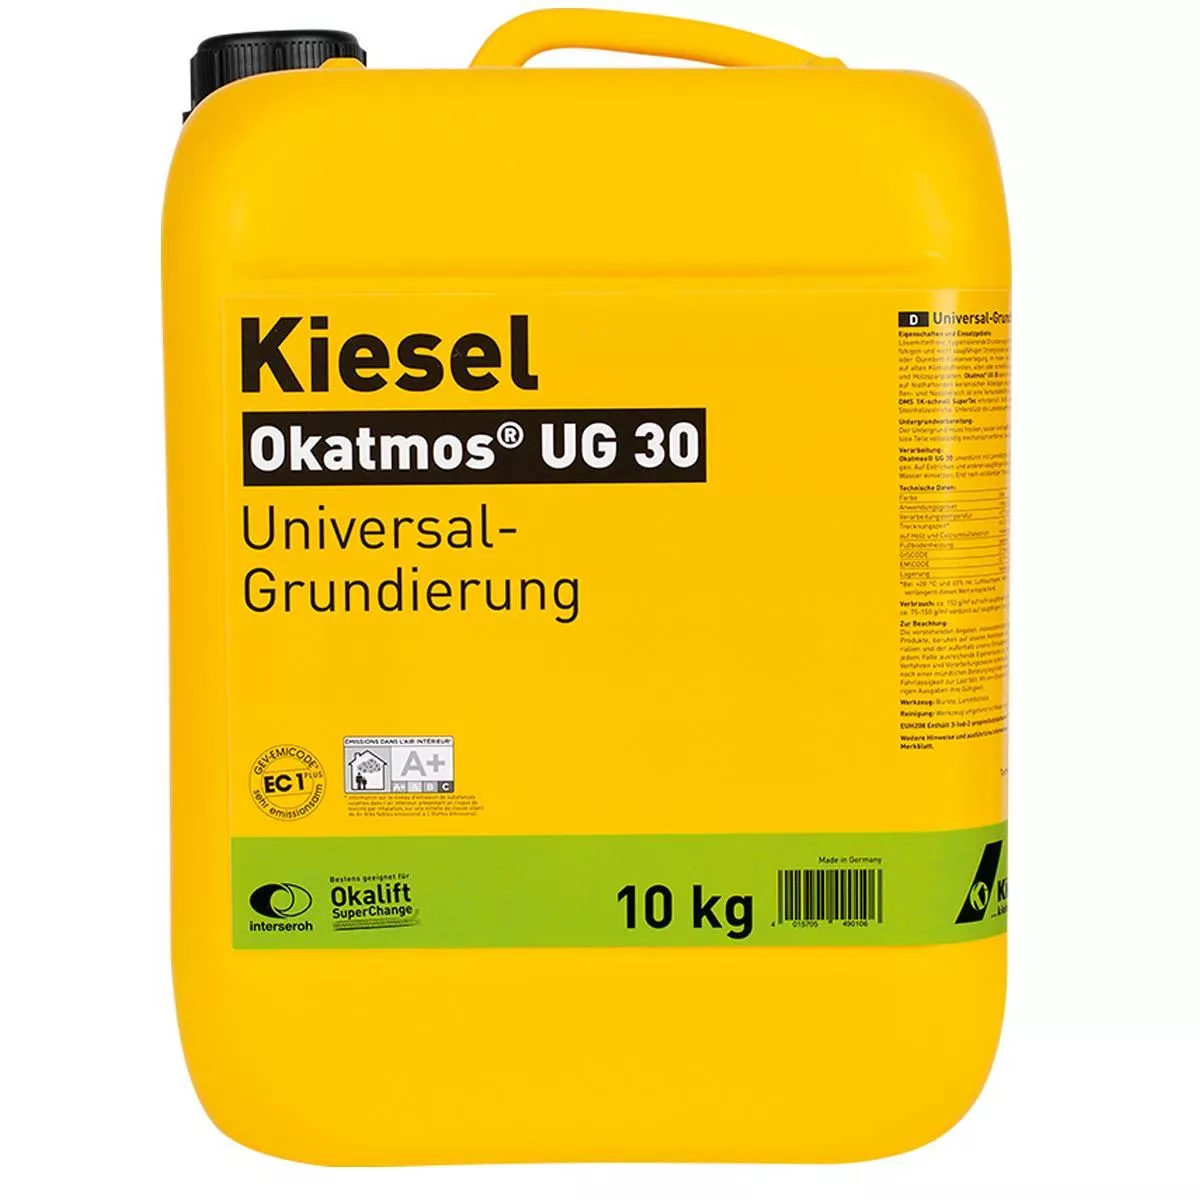 Universal primer Kiesel Okatmos UG 30 Blue 10 kg